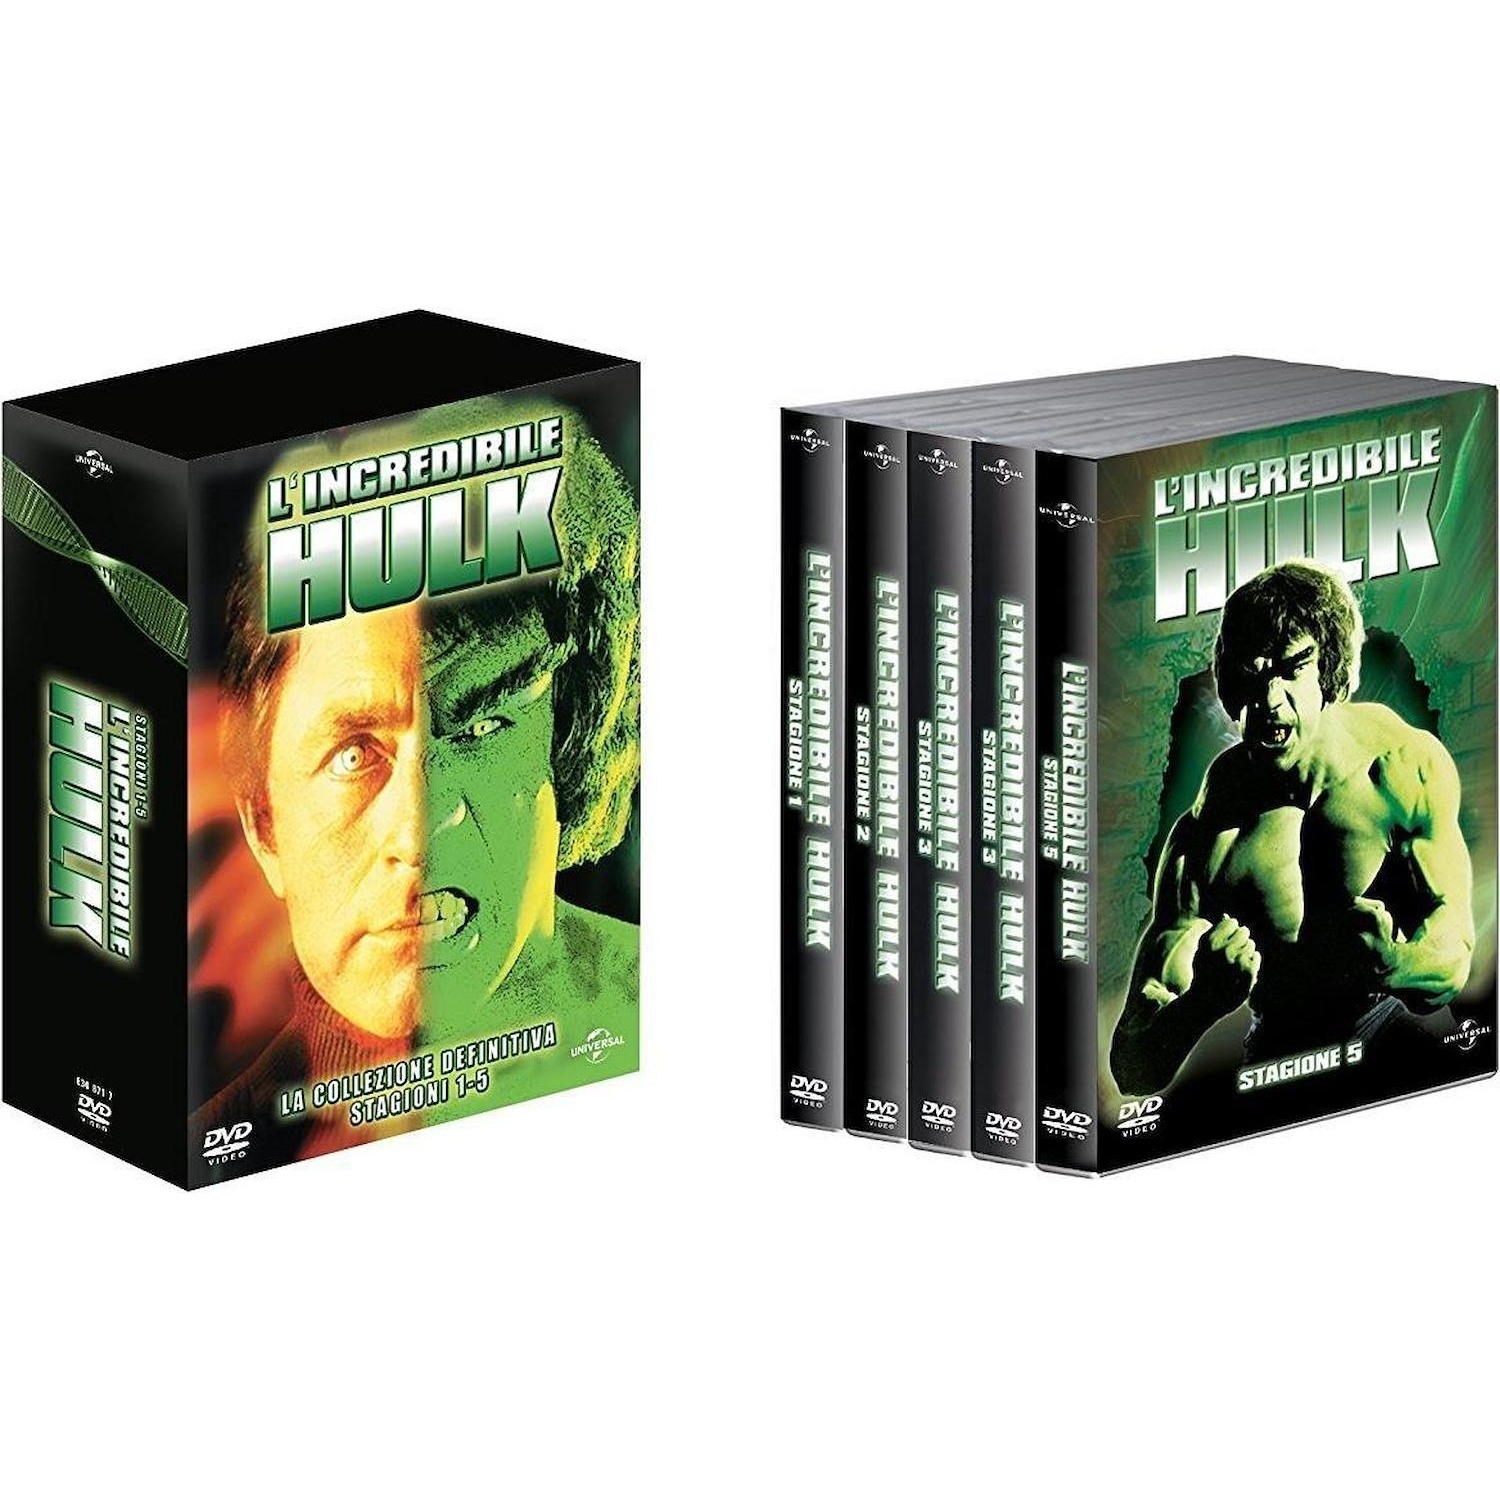 Immagine per Serie TV DVD L'Incredibile Hulk  serie completa da DIMOStore